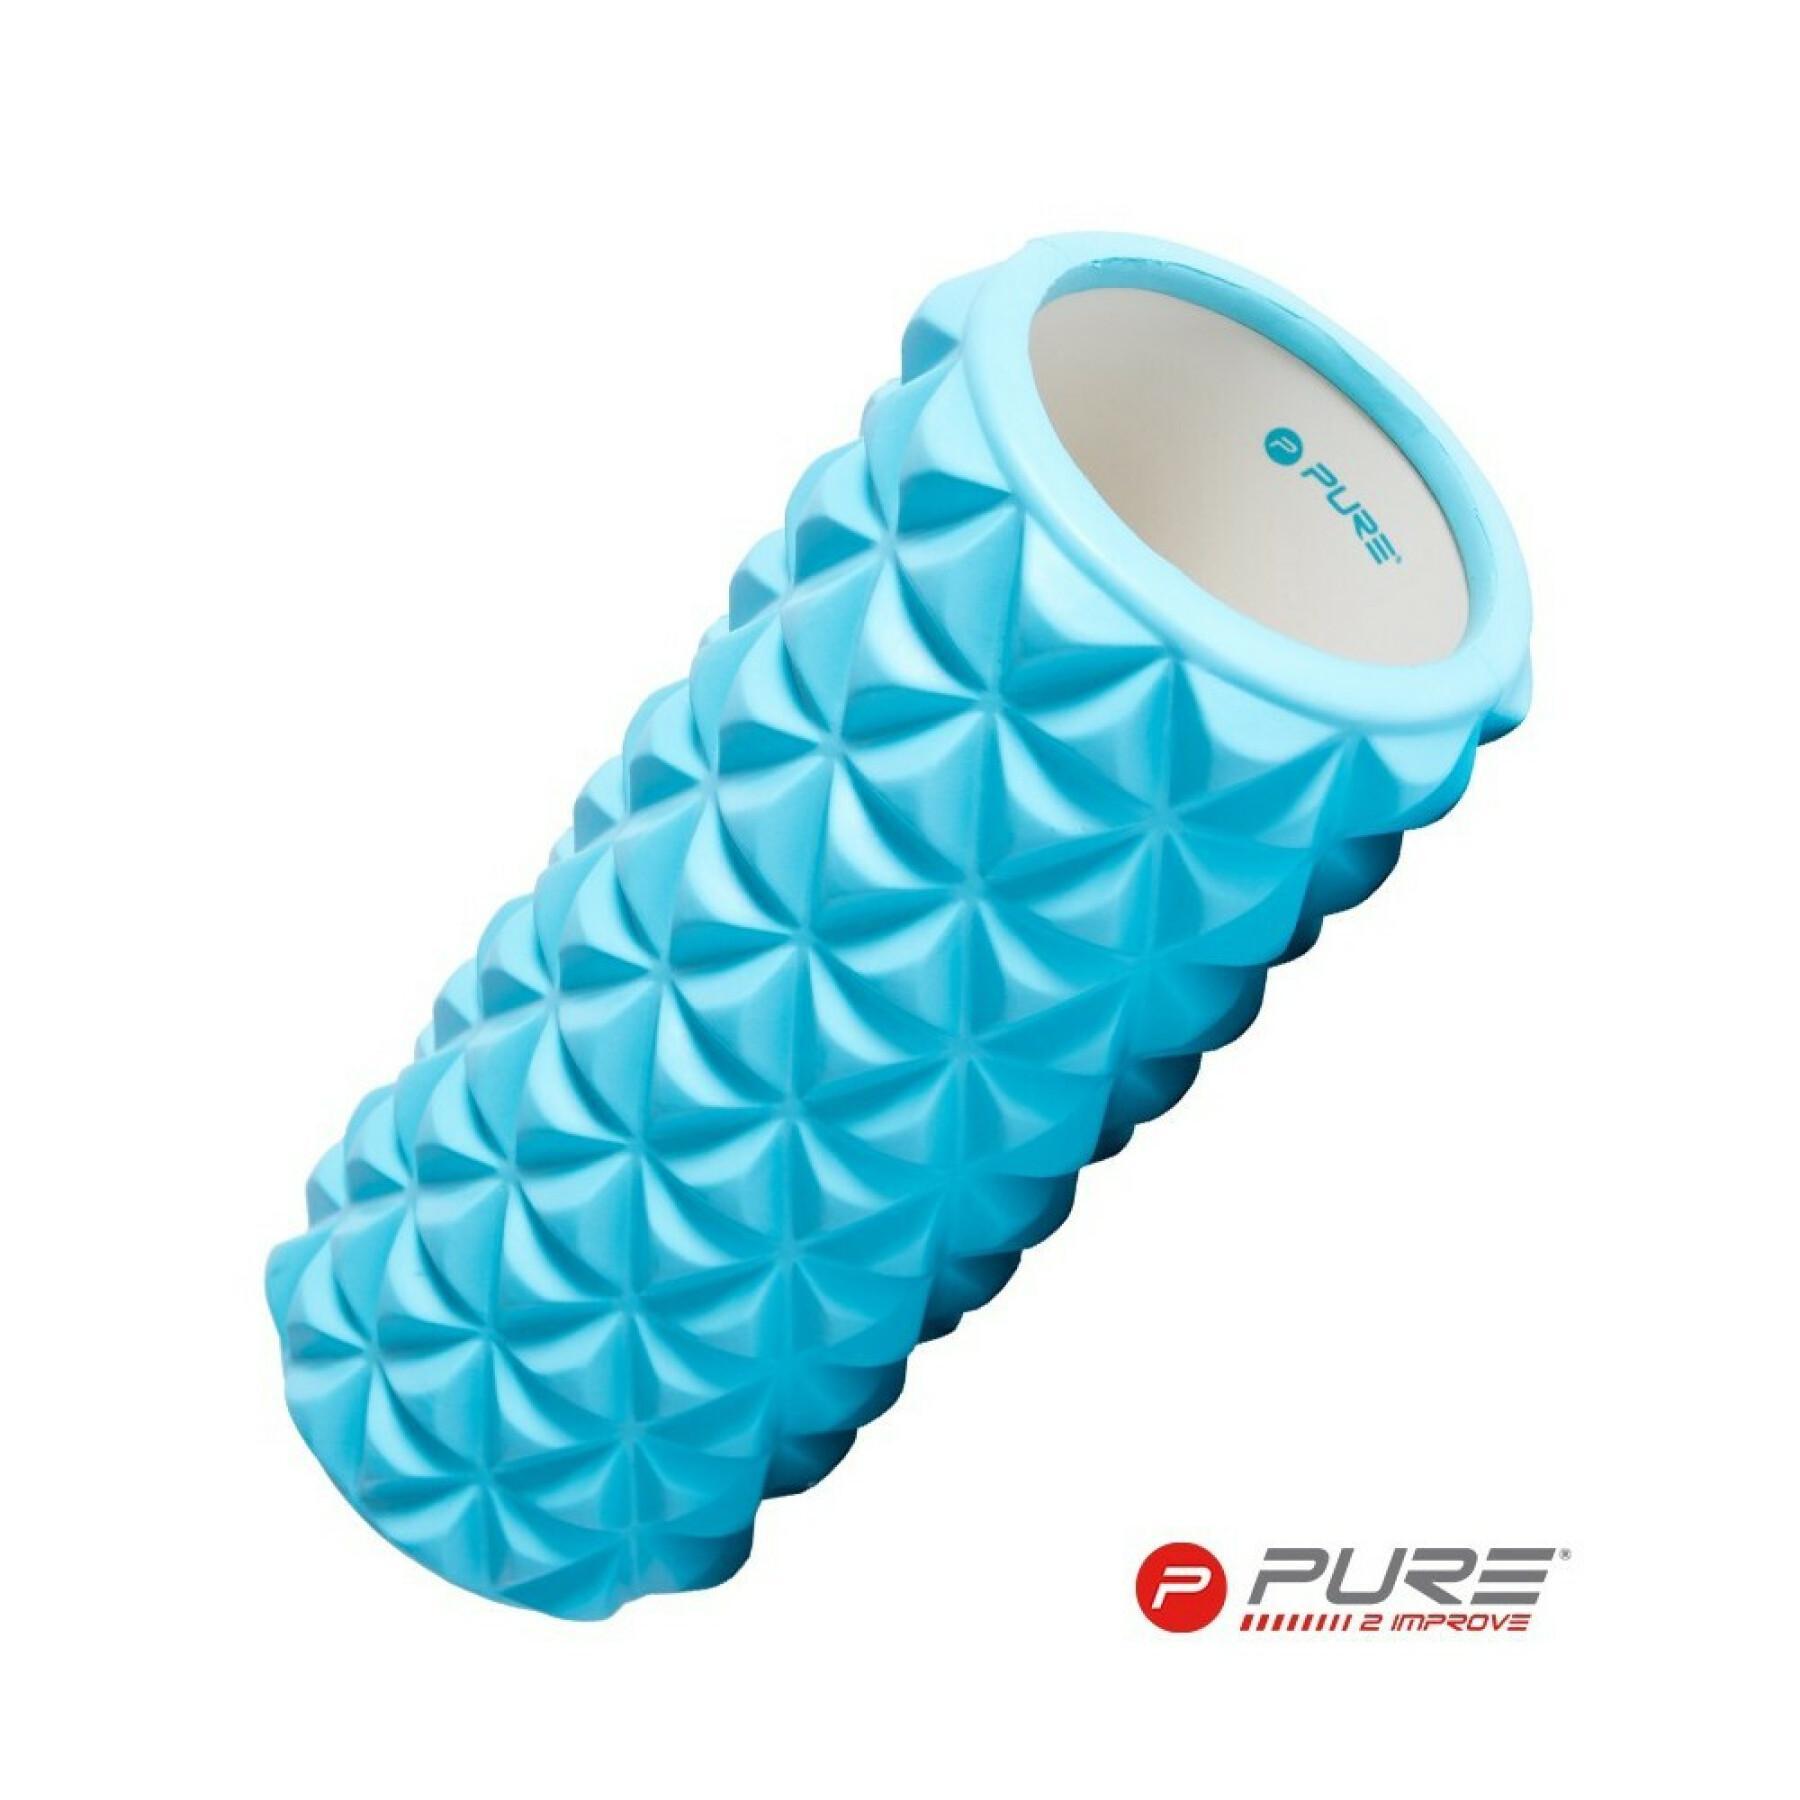 Yogaroller Pure2Improve 33x14dia - Accessories - Yoga - Physical maintenance